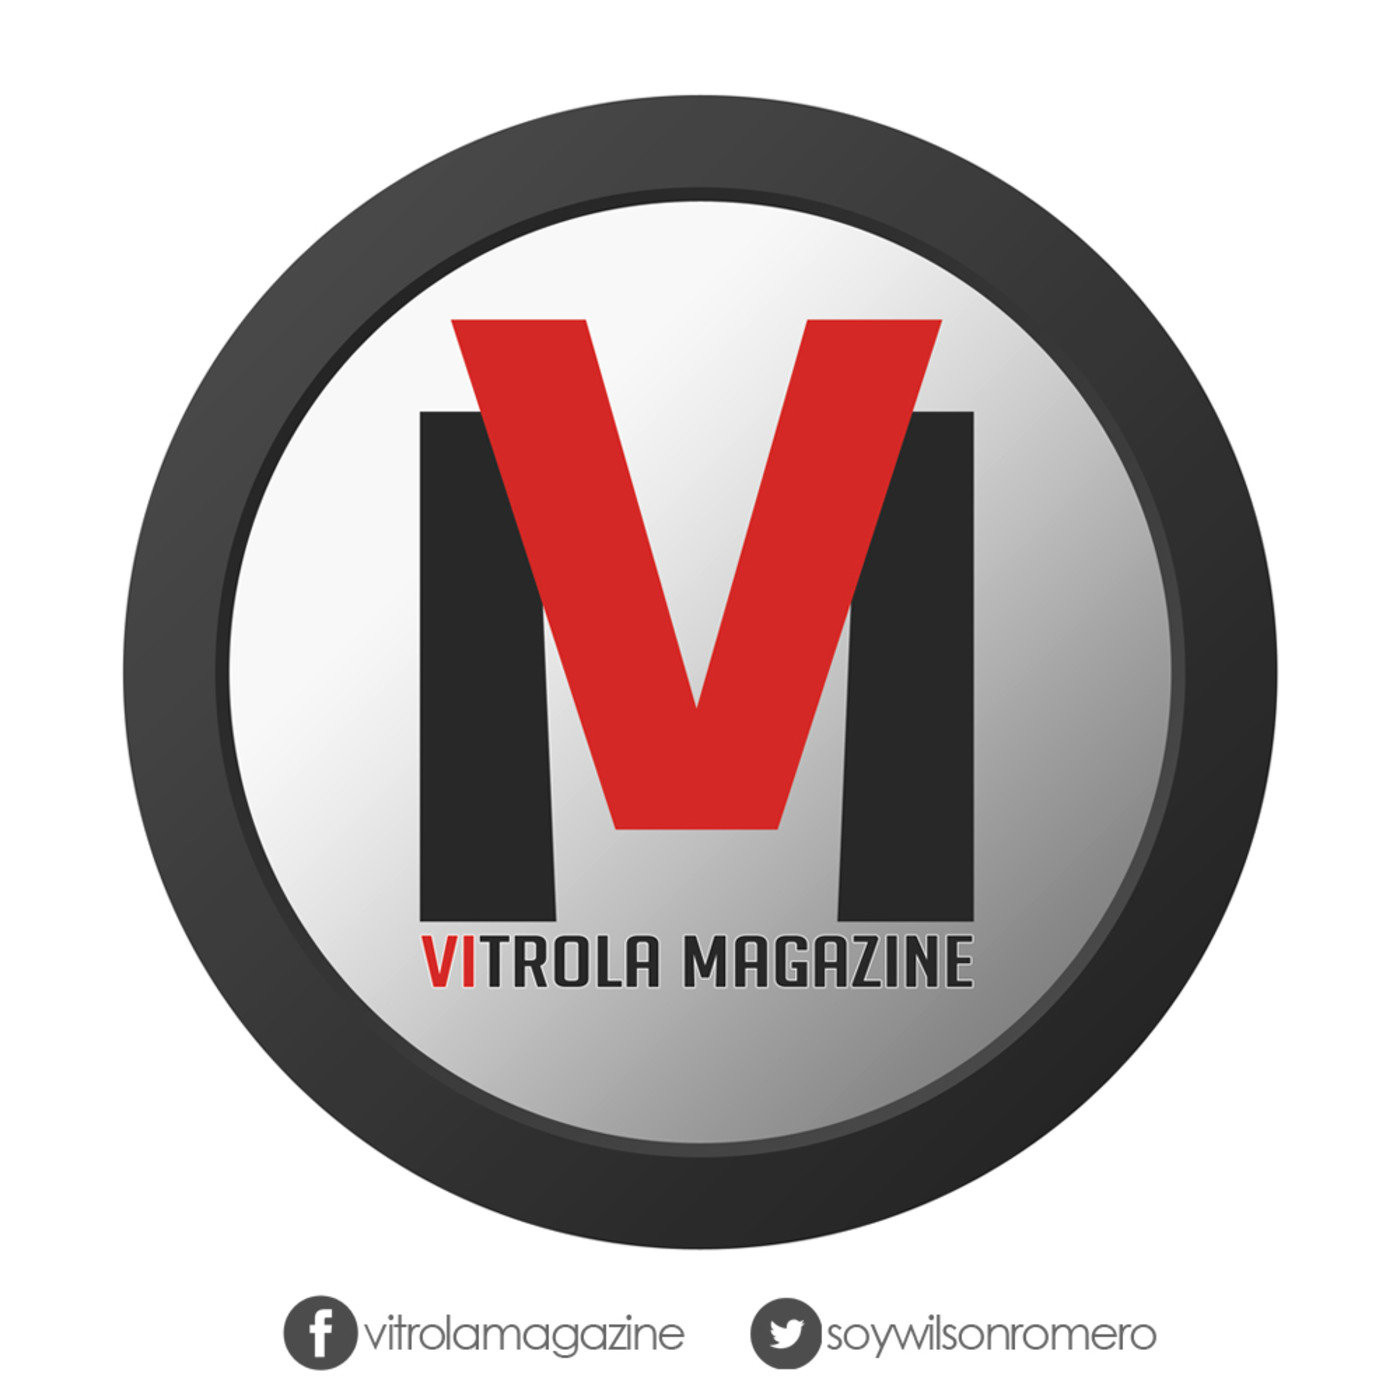 Vitrola Magazine